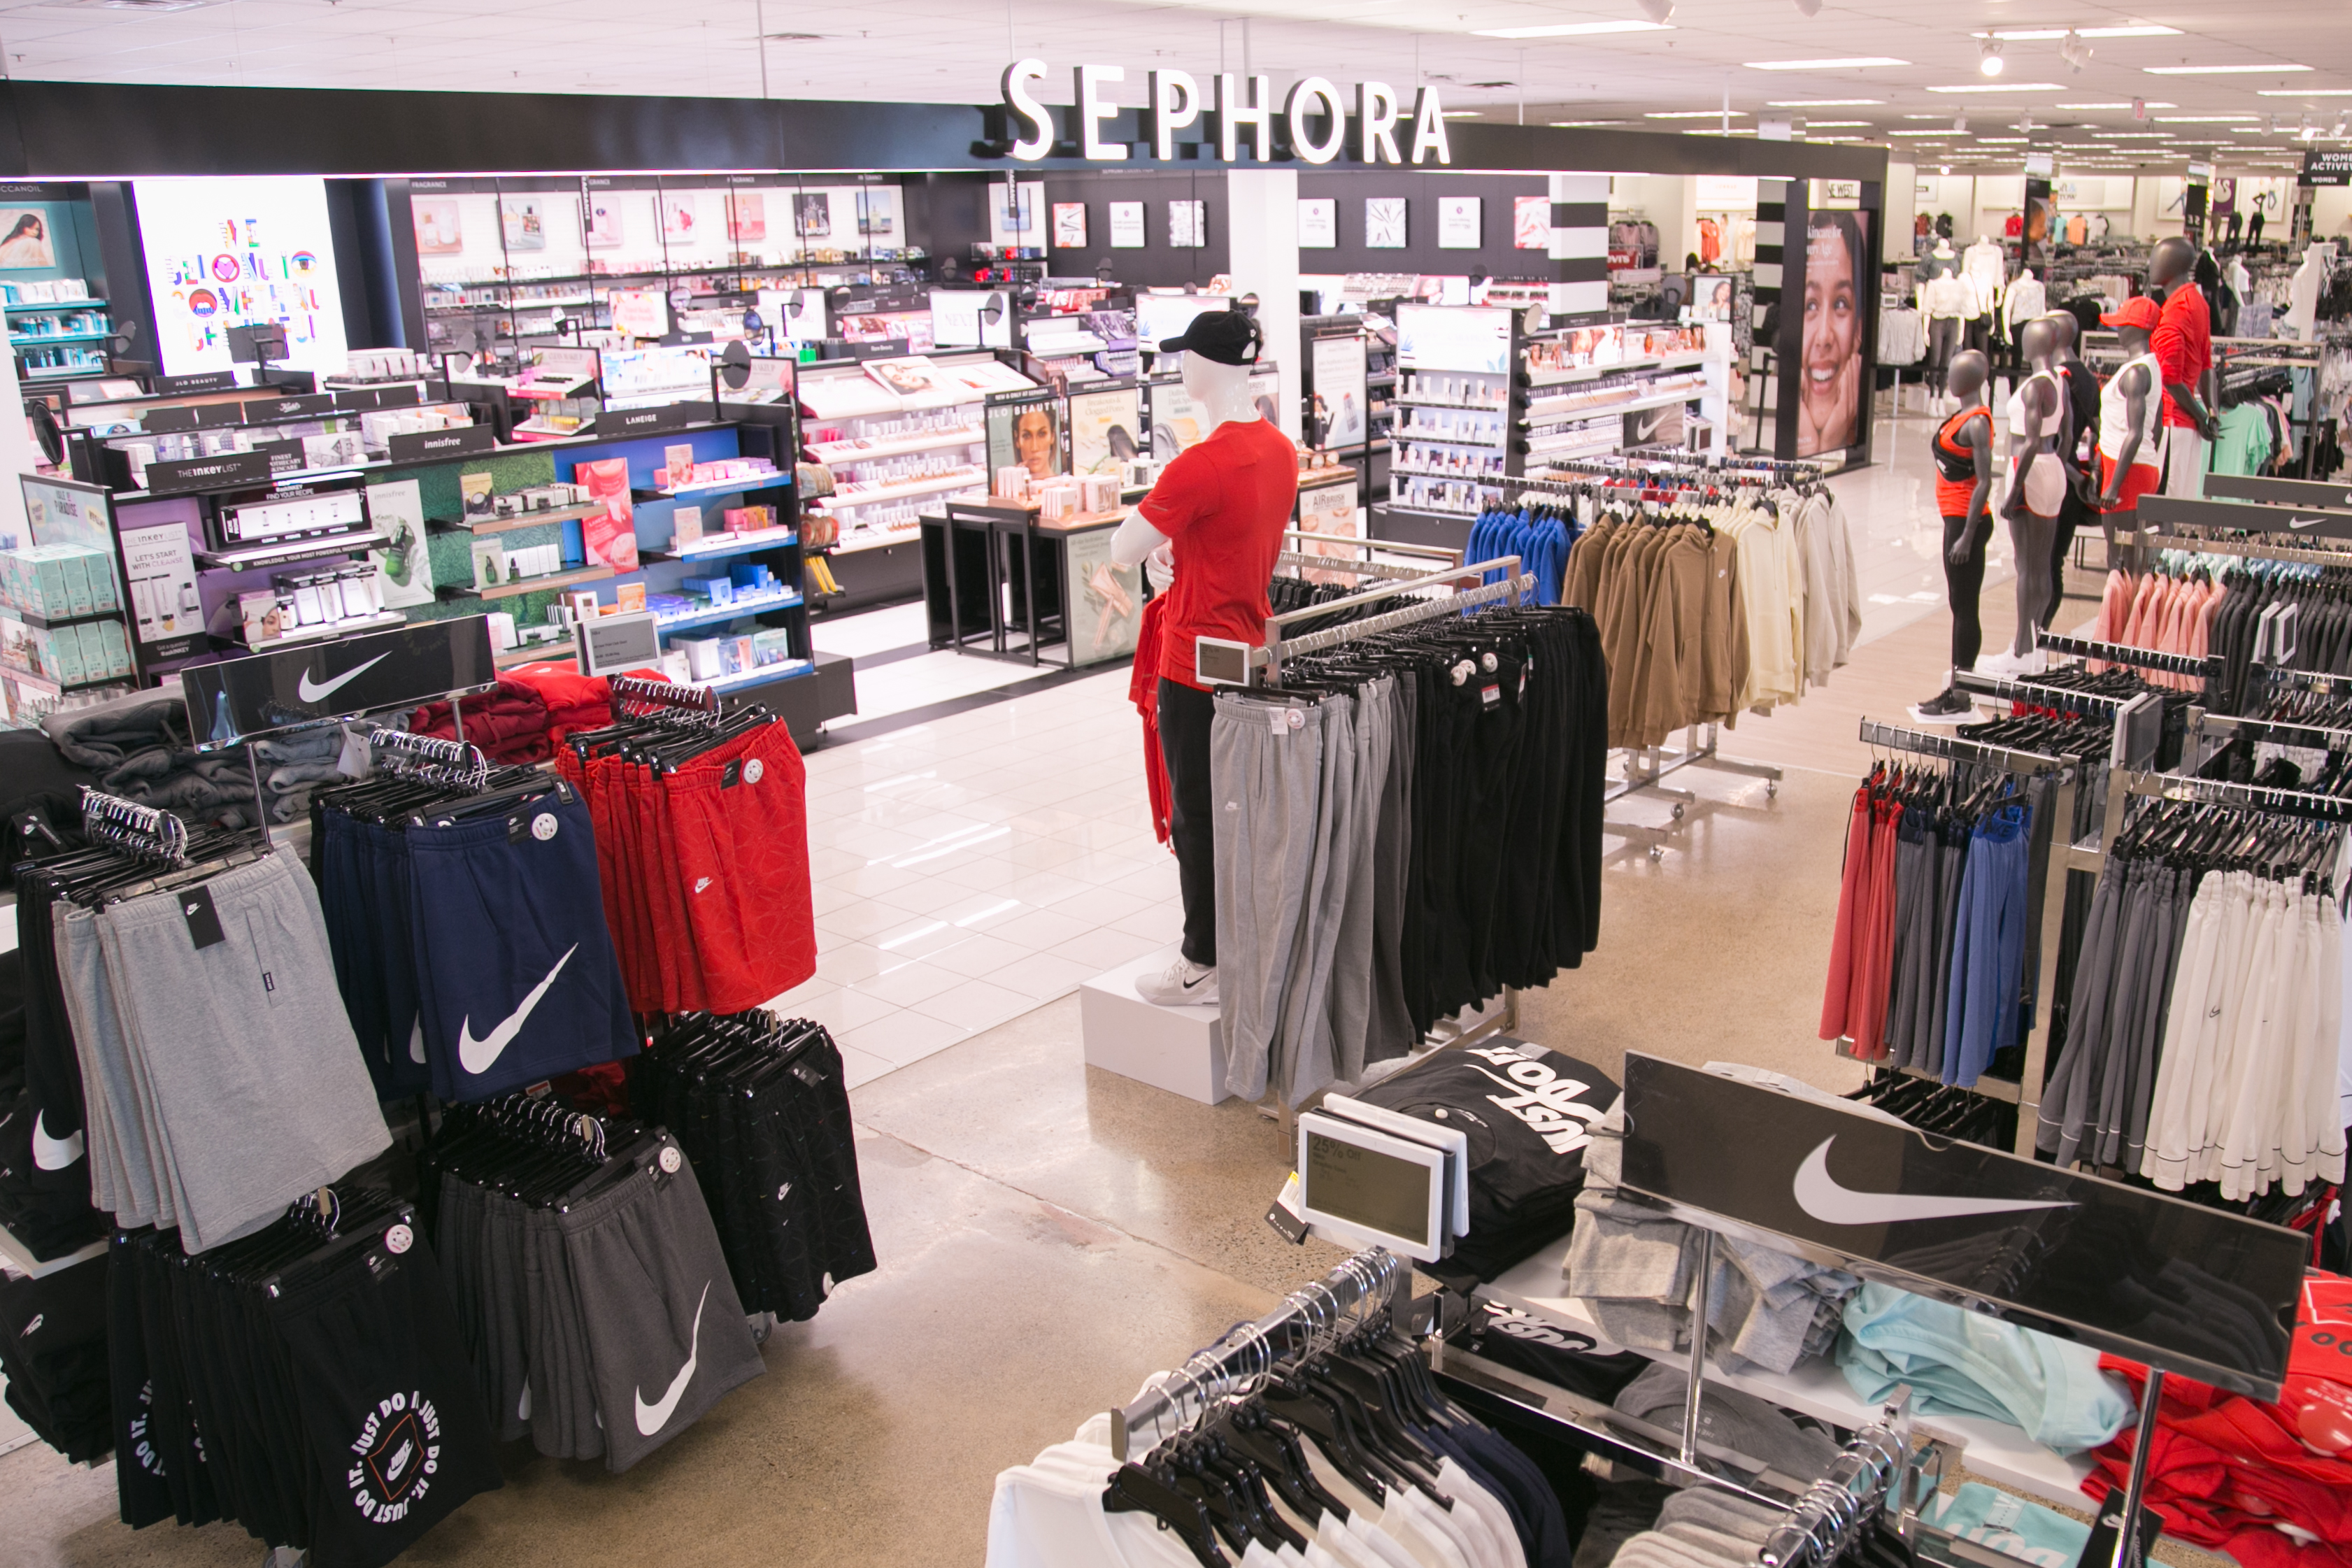 Sephora to open 13 stores inside Houston Kohl's during 2023